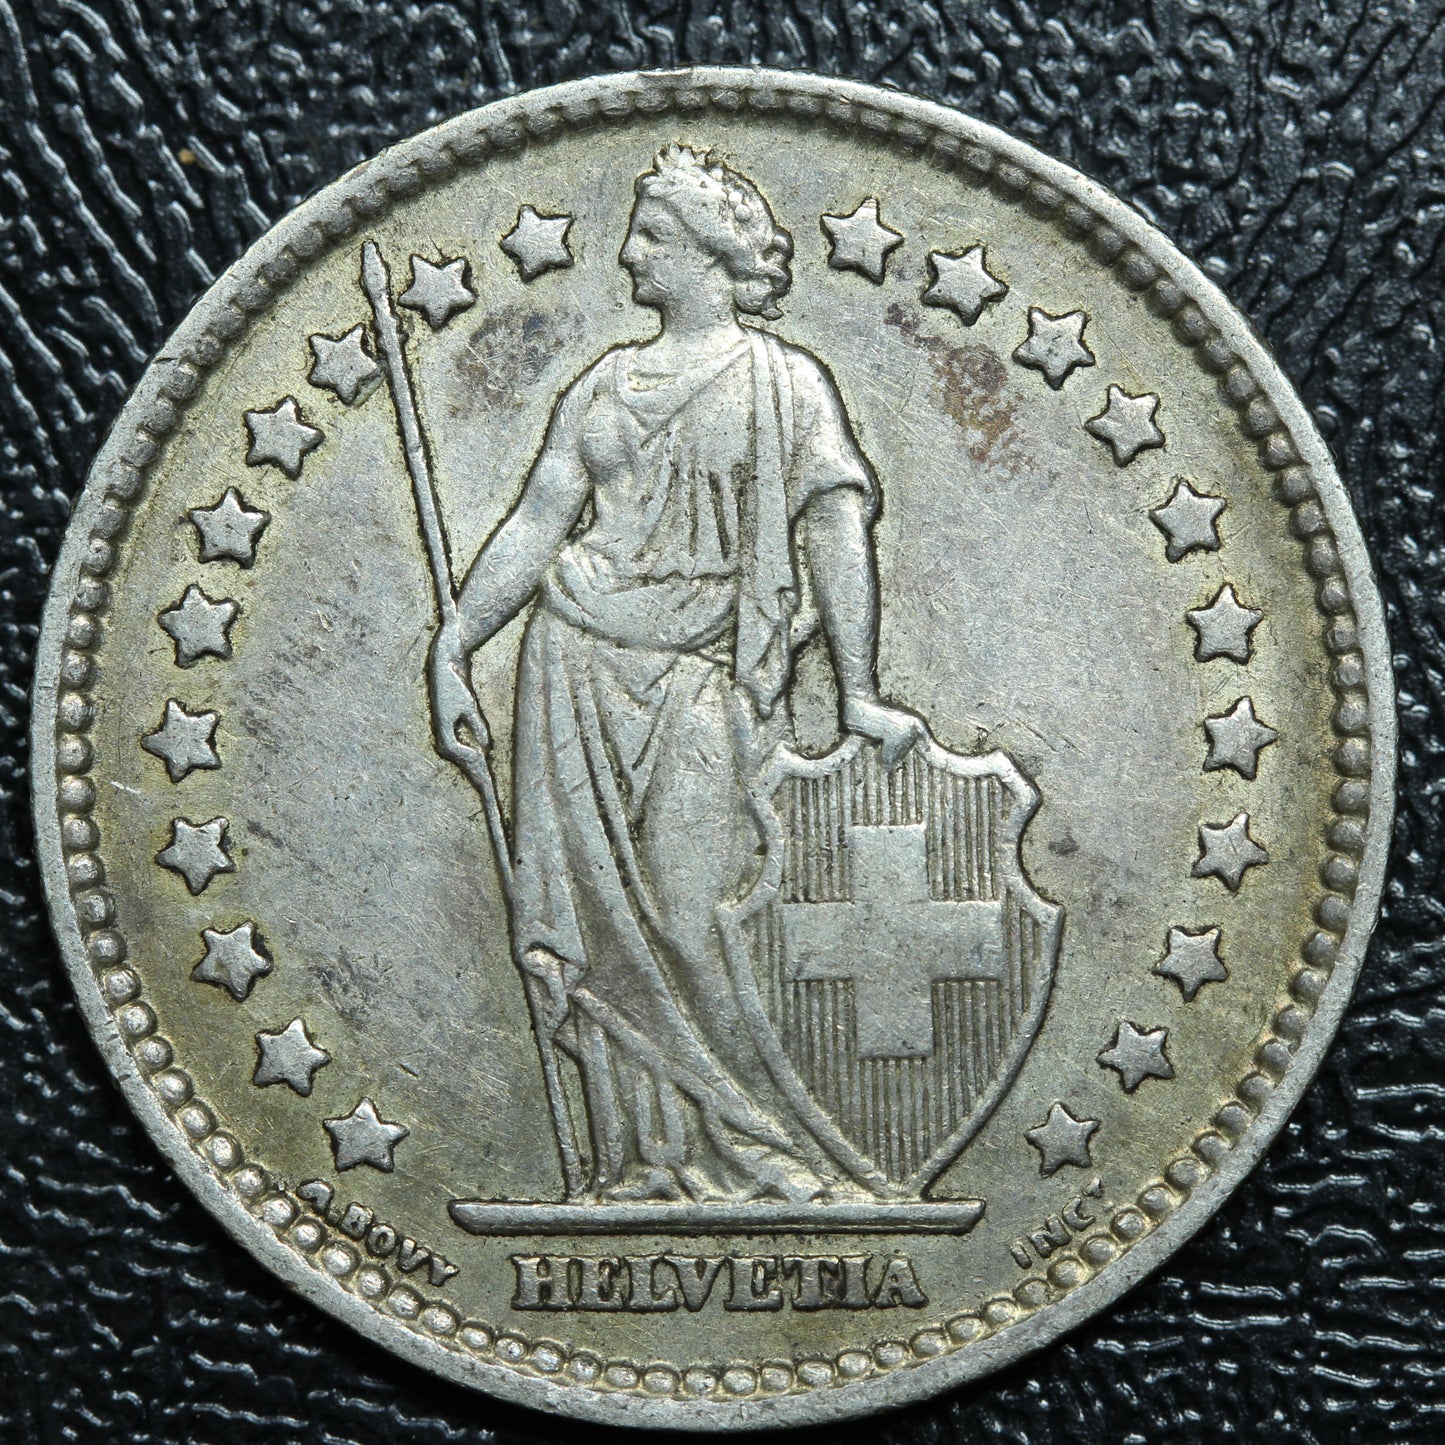 1913 B Switzerland 1 FRANC Silver KM#24